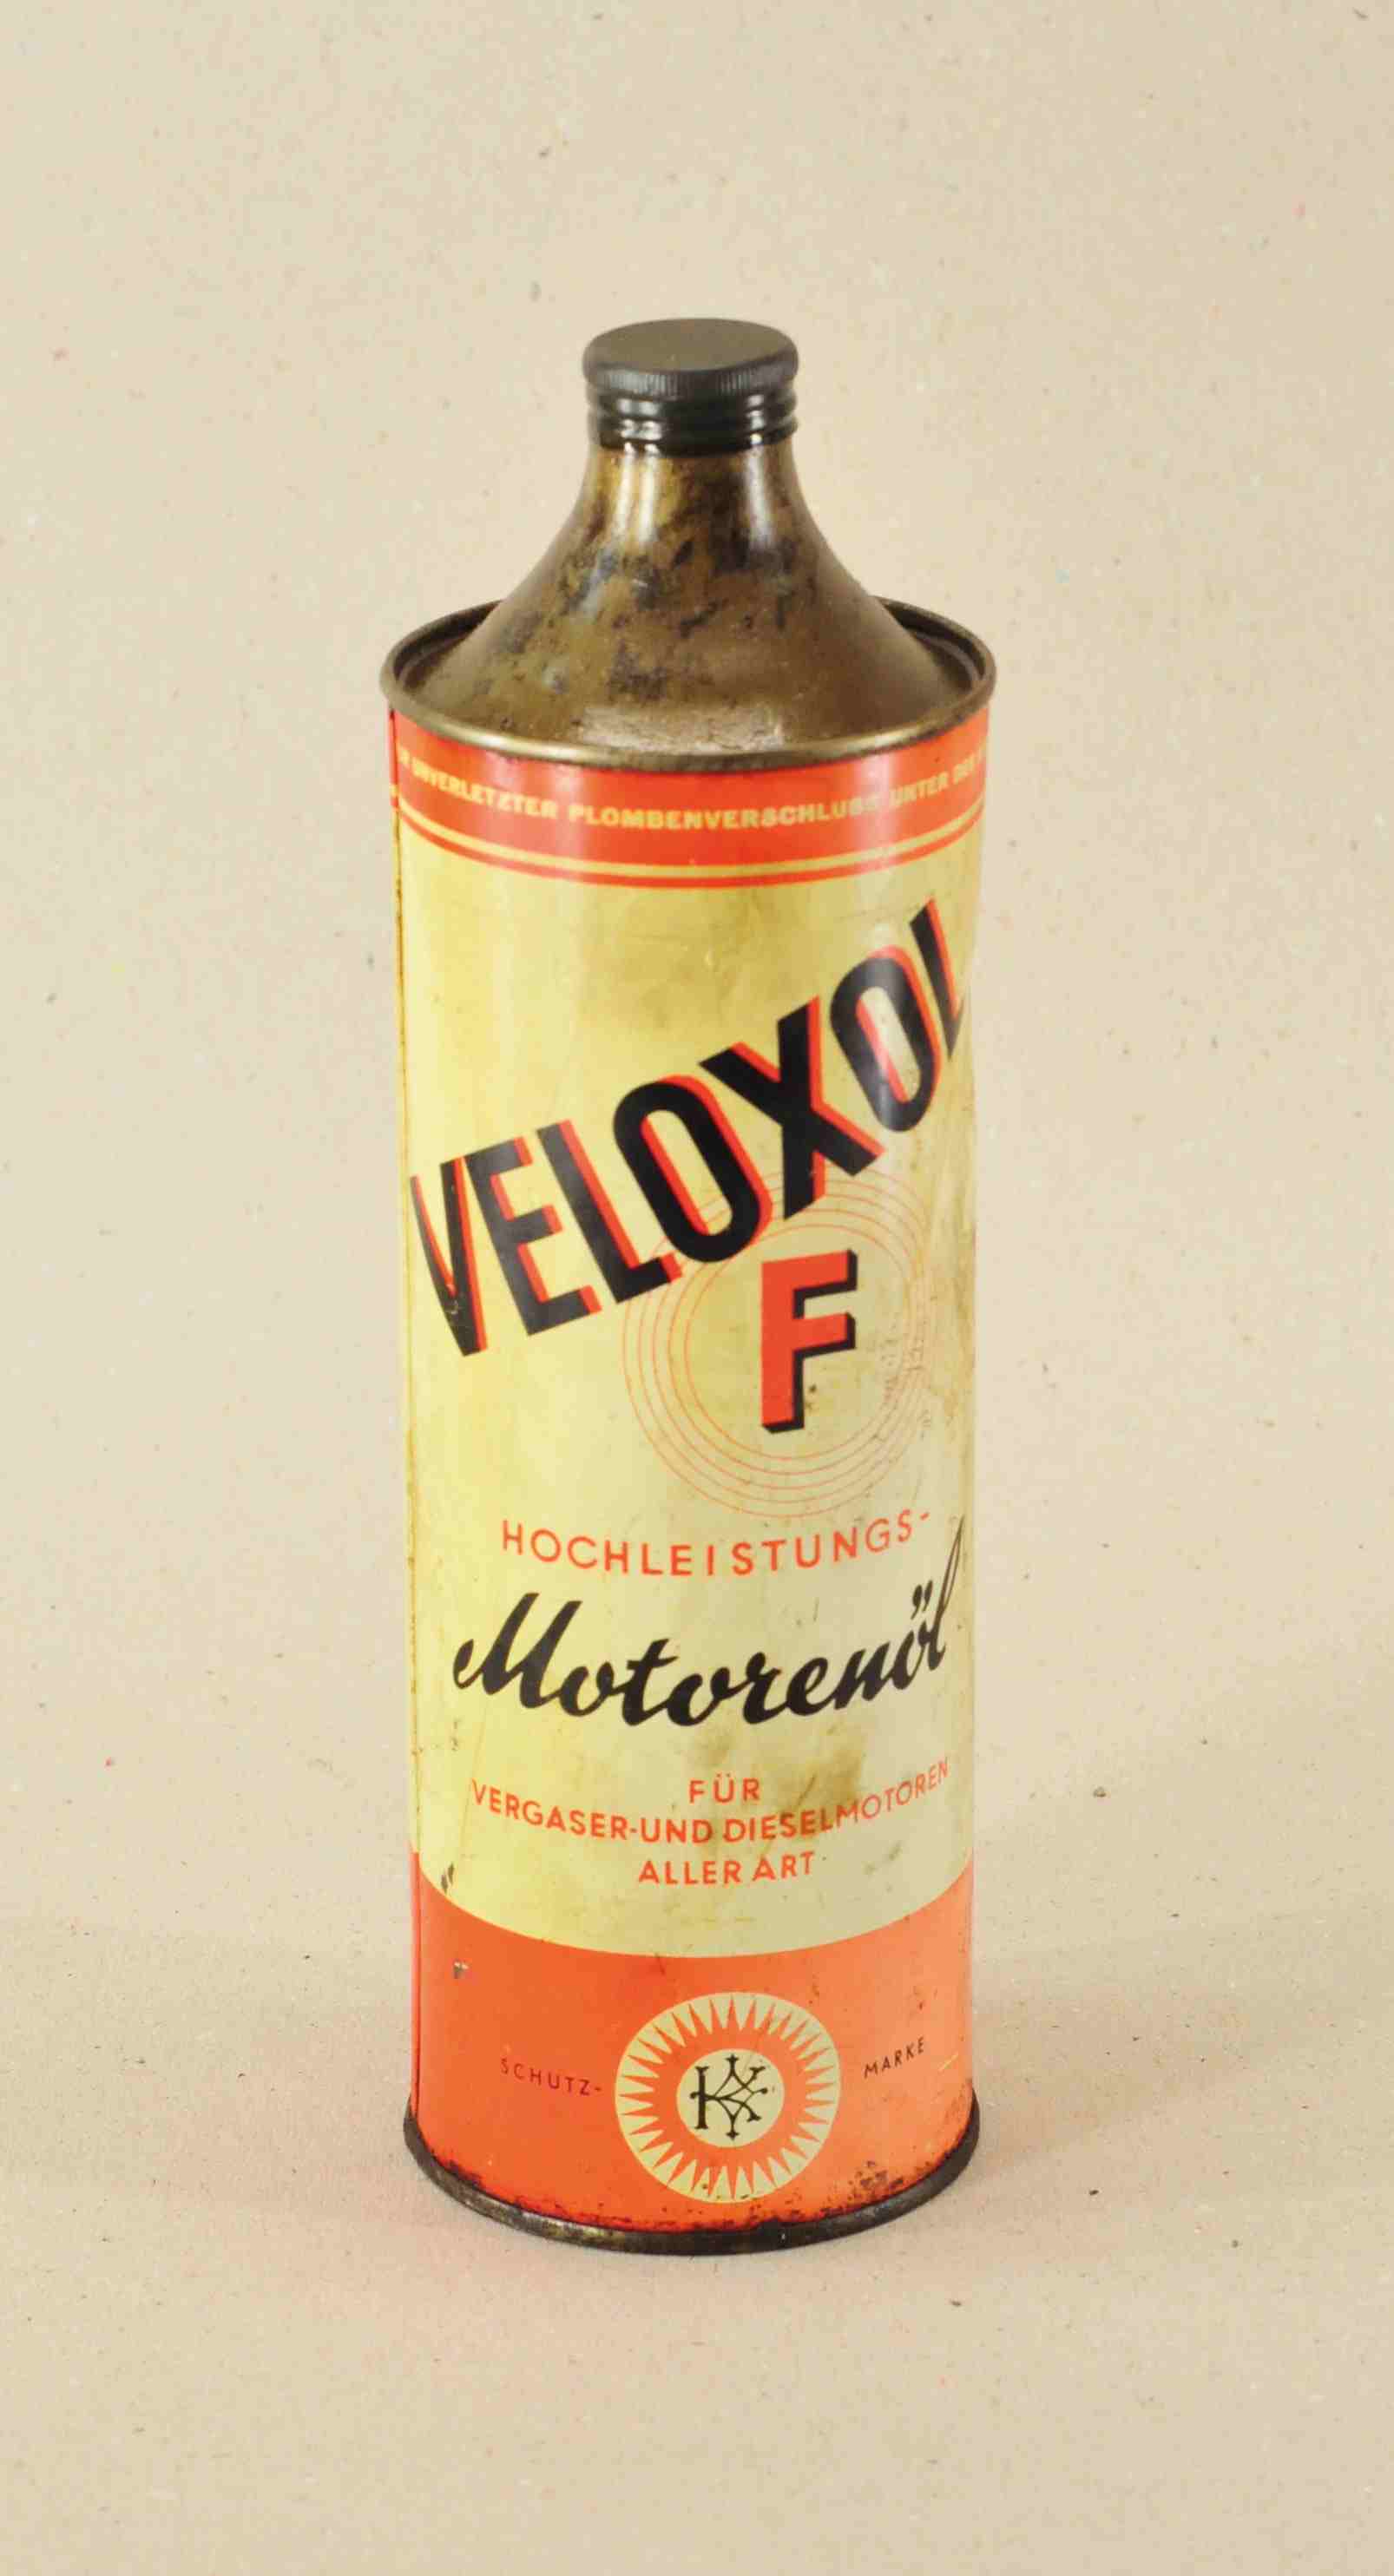 Veloxol "F" gefüllte Öldose 